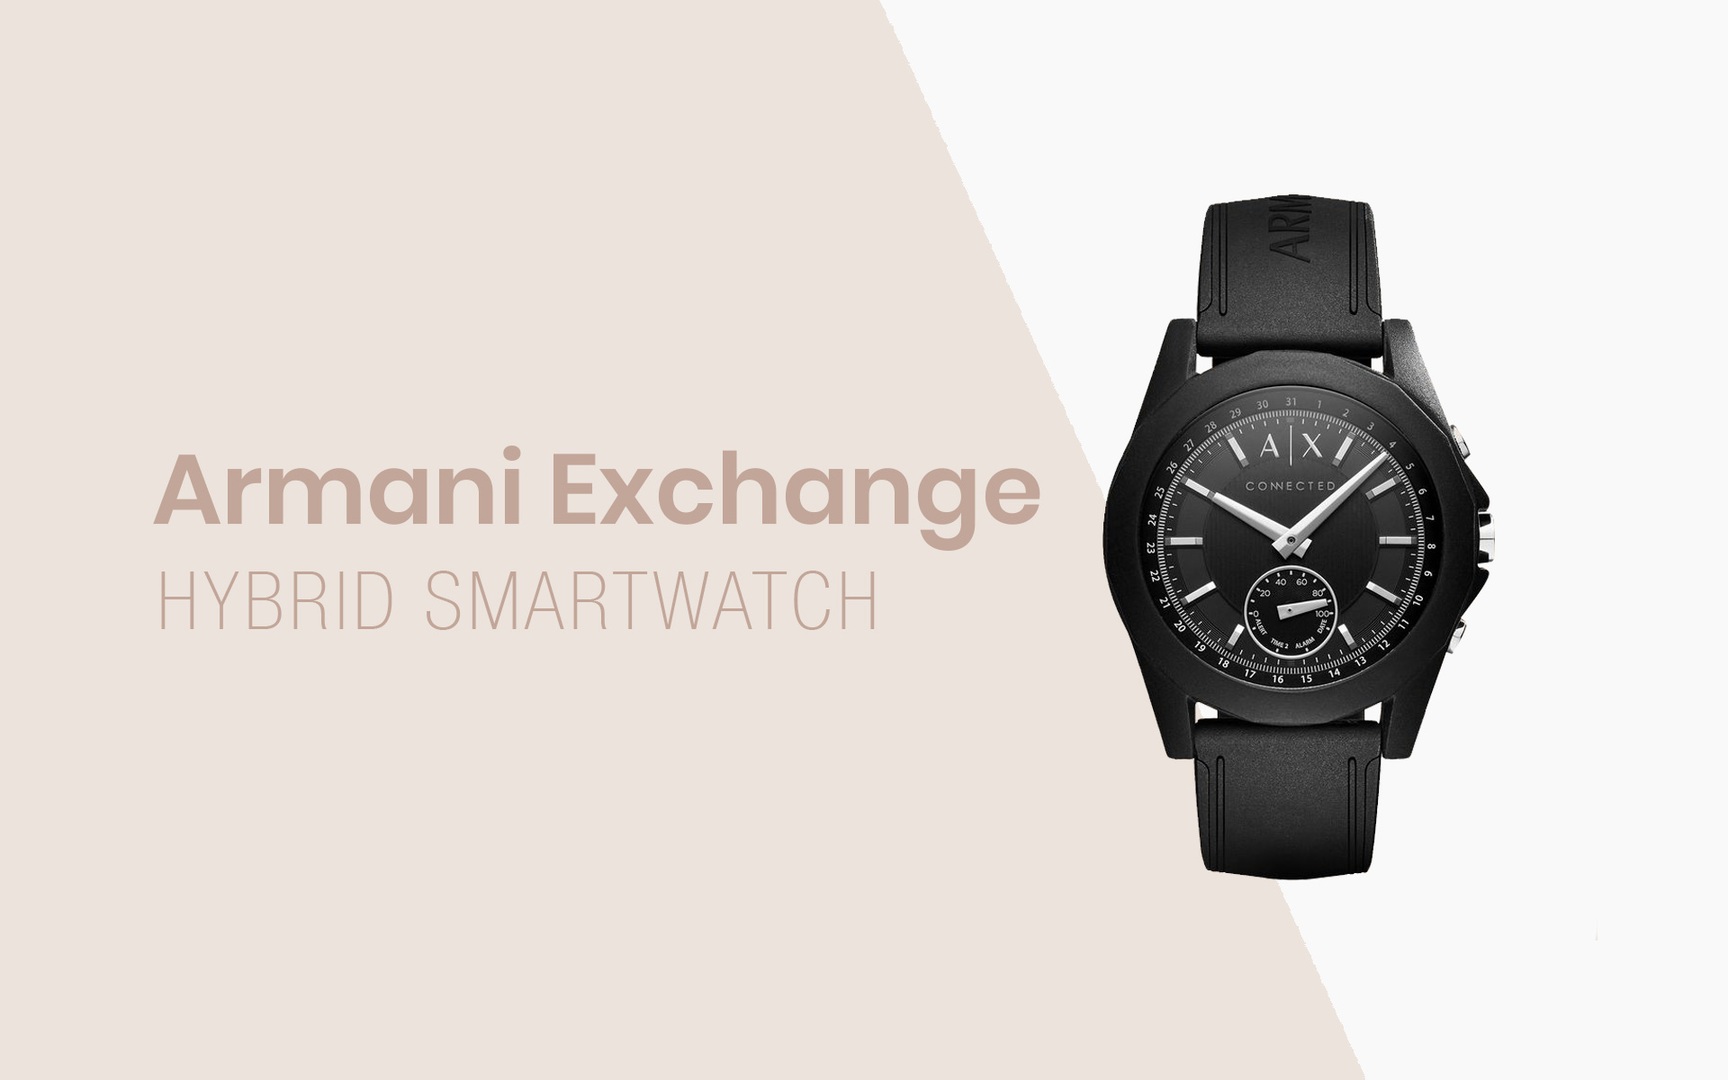 Armani Exchange Launches New Hybrid 